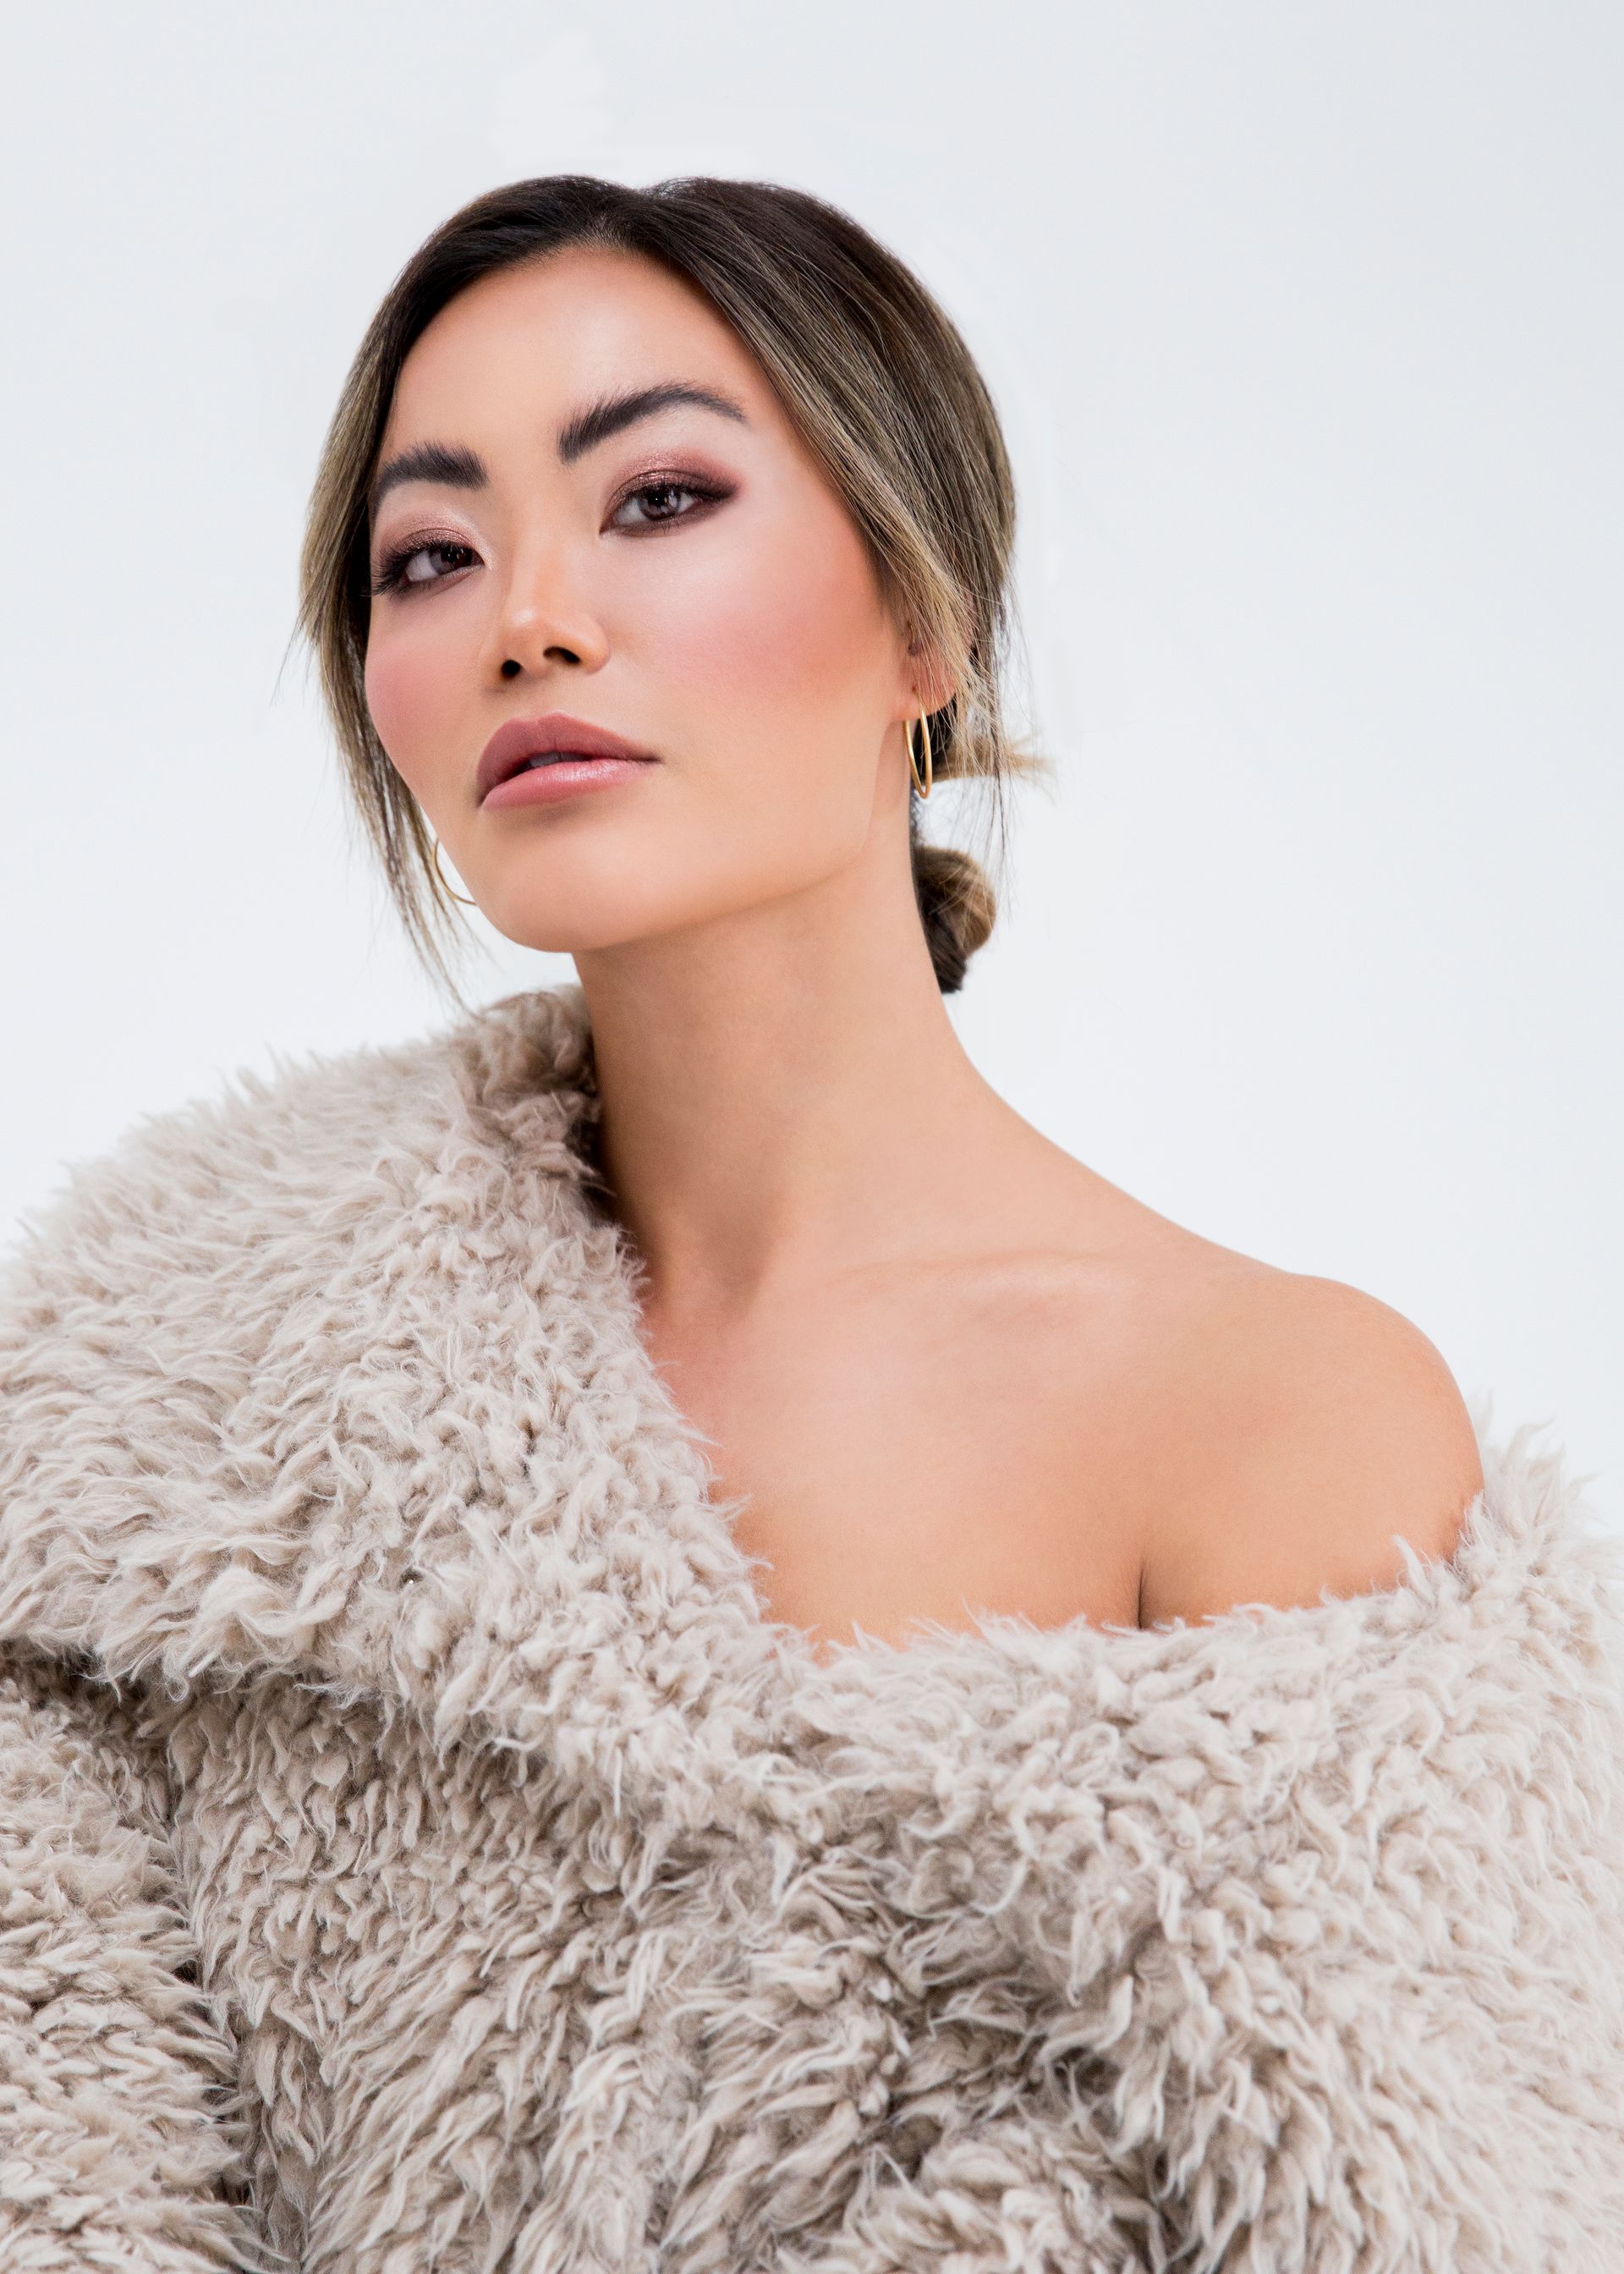 headshot of beautiful asian woman with makeup and fur coat